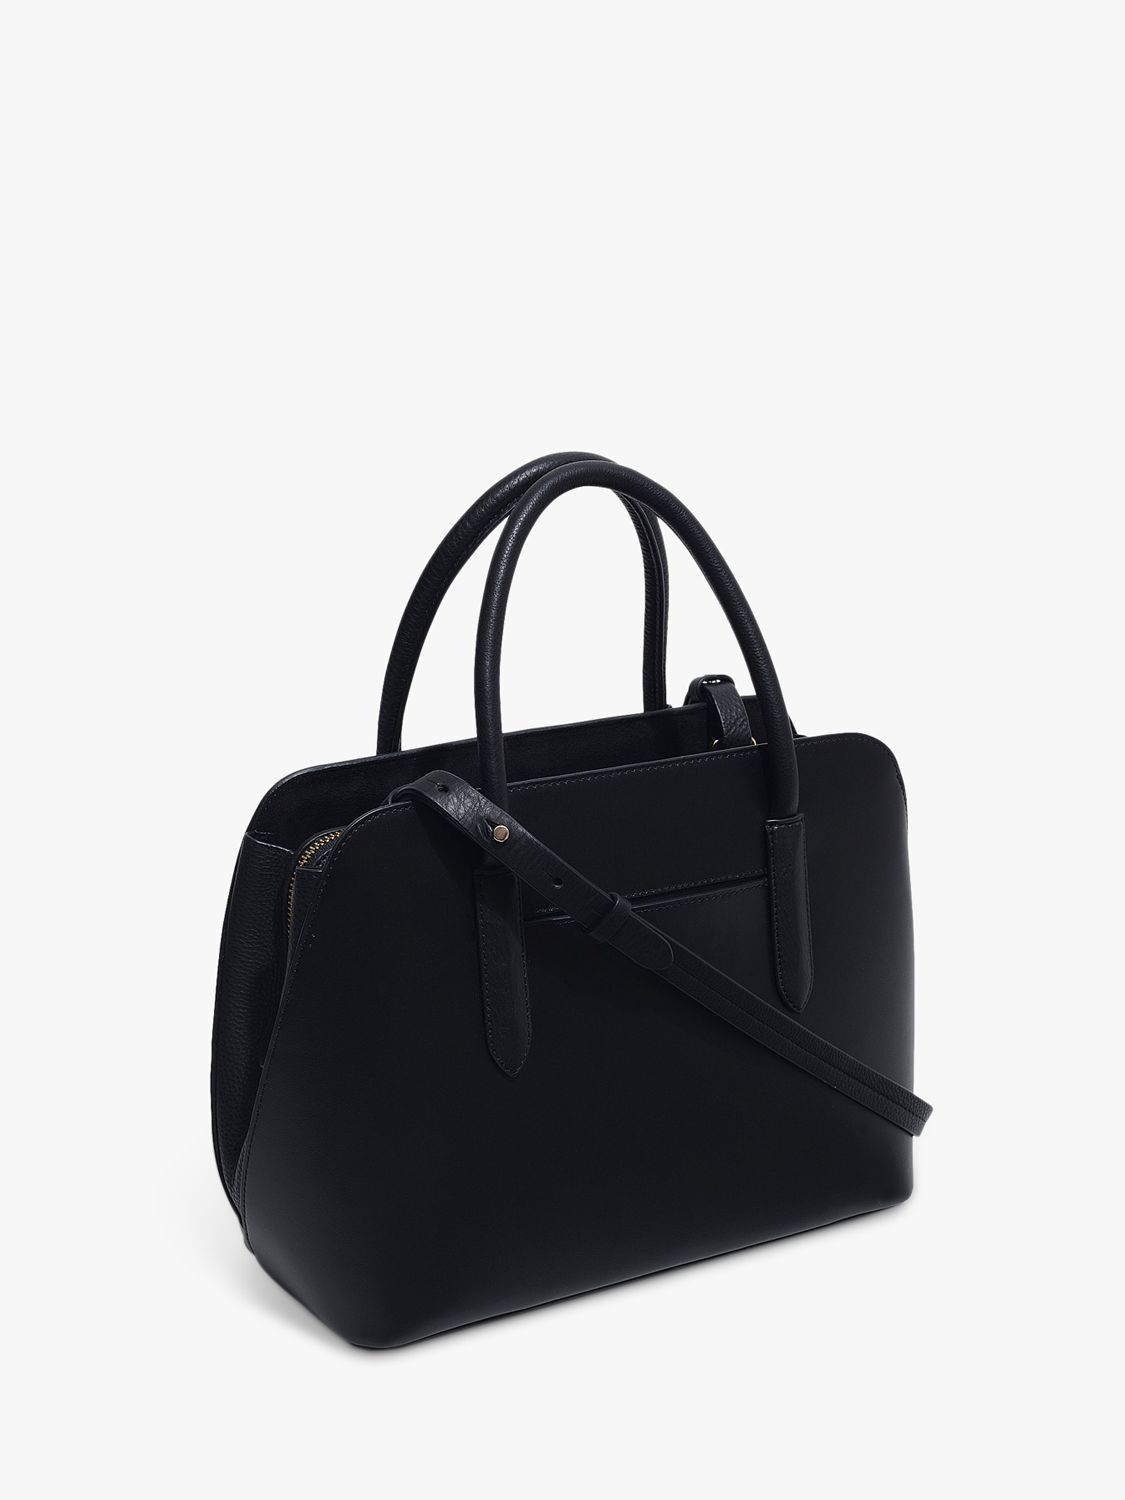 Radley Liverpool Street 2.0 Leather Medium Multiway Bag, Black